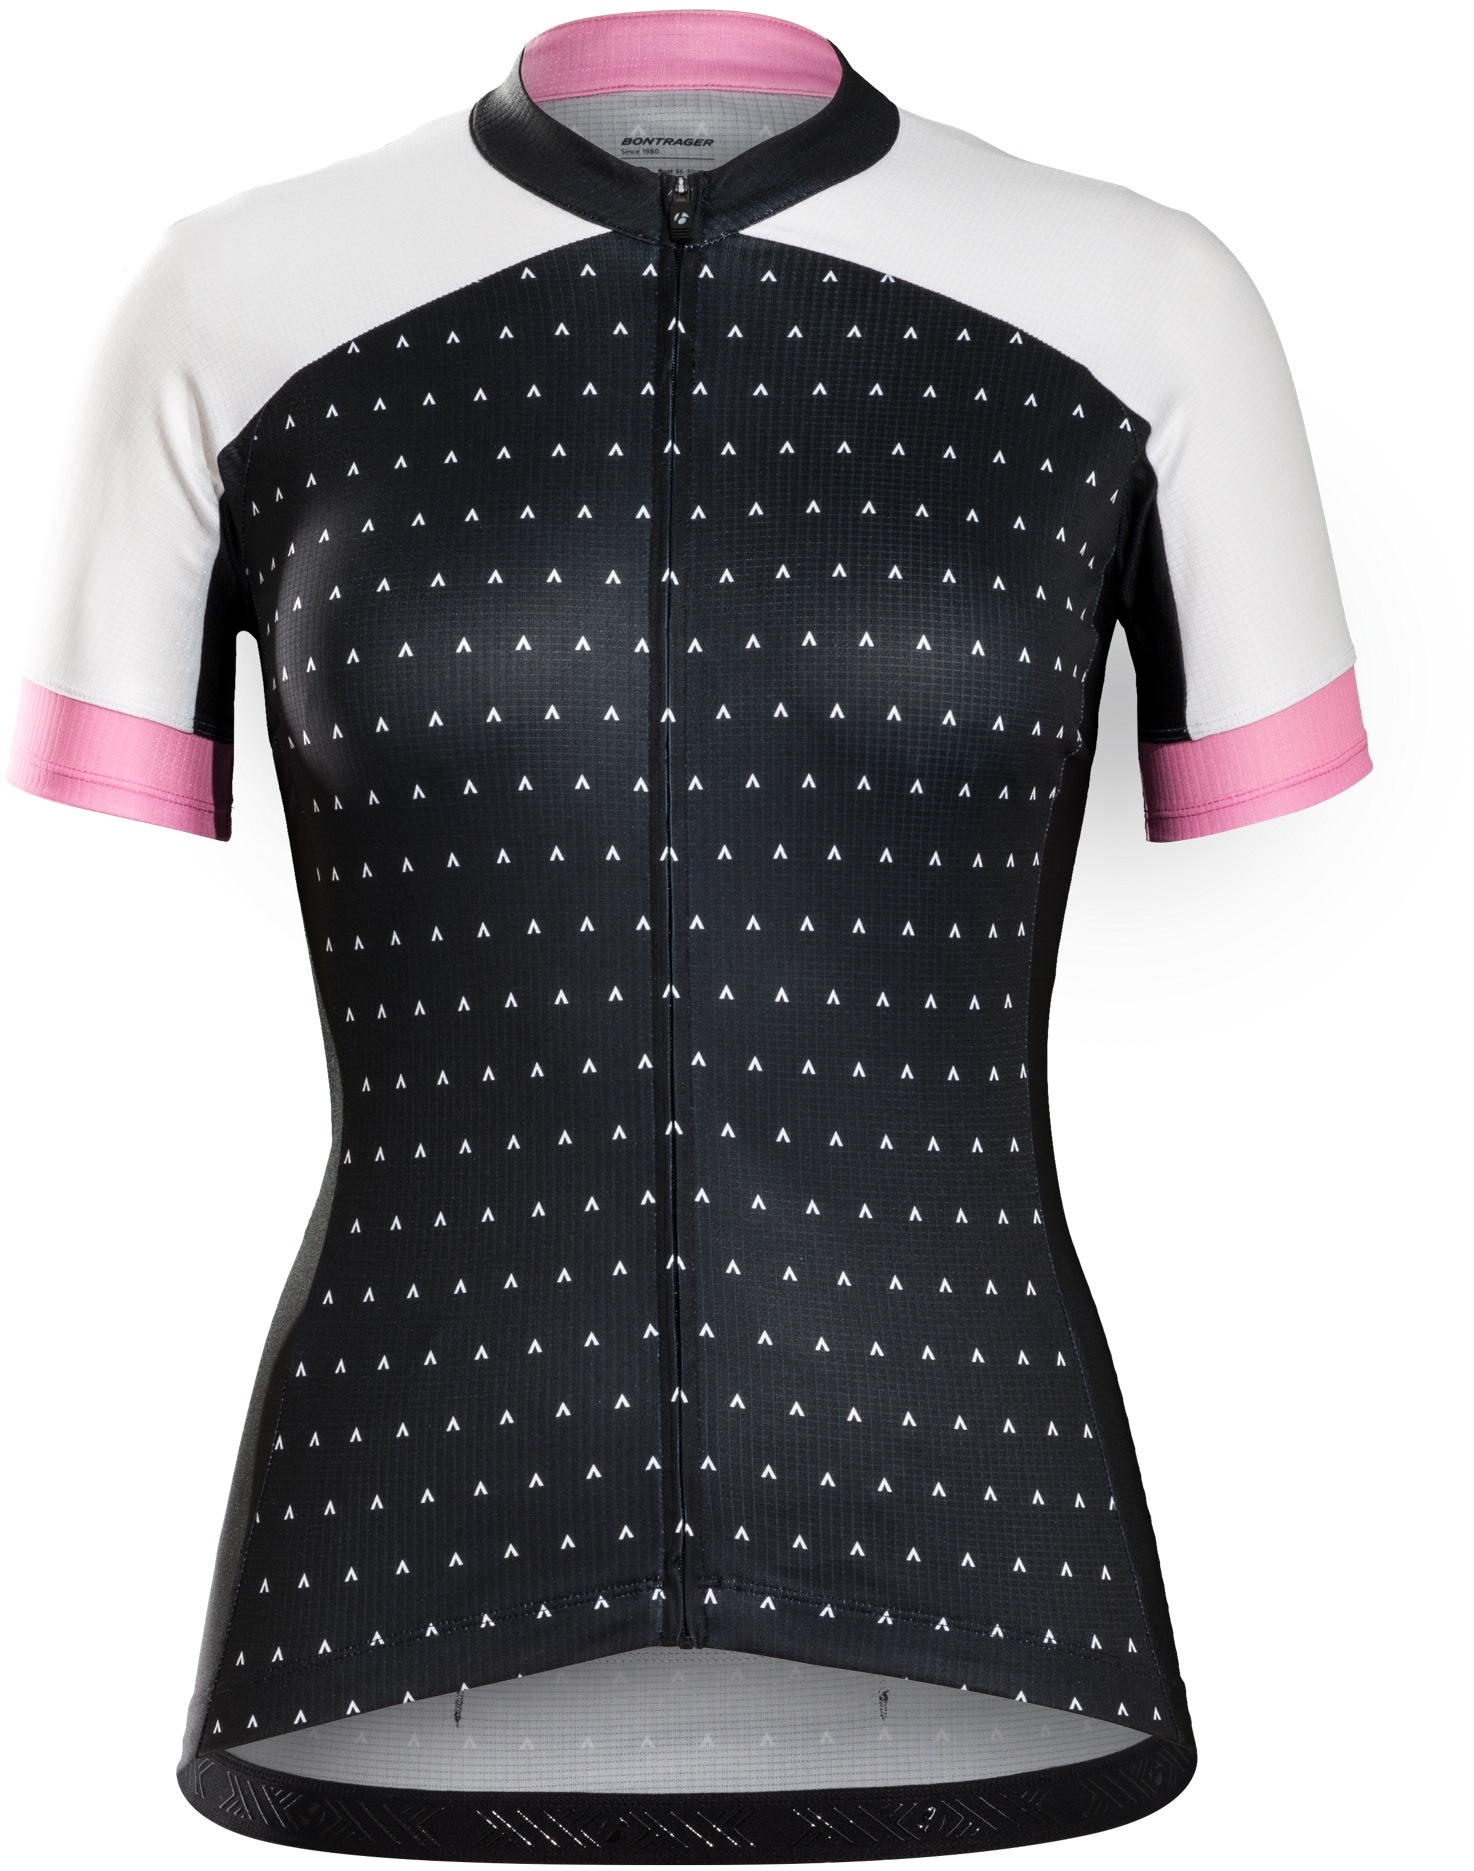 bontrager women's cycling jersey